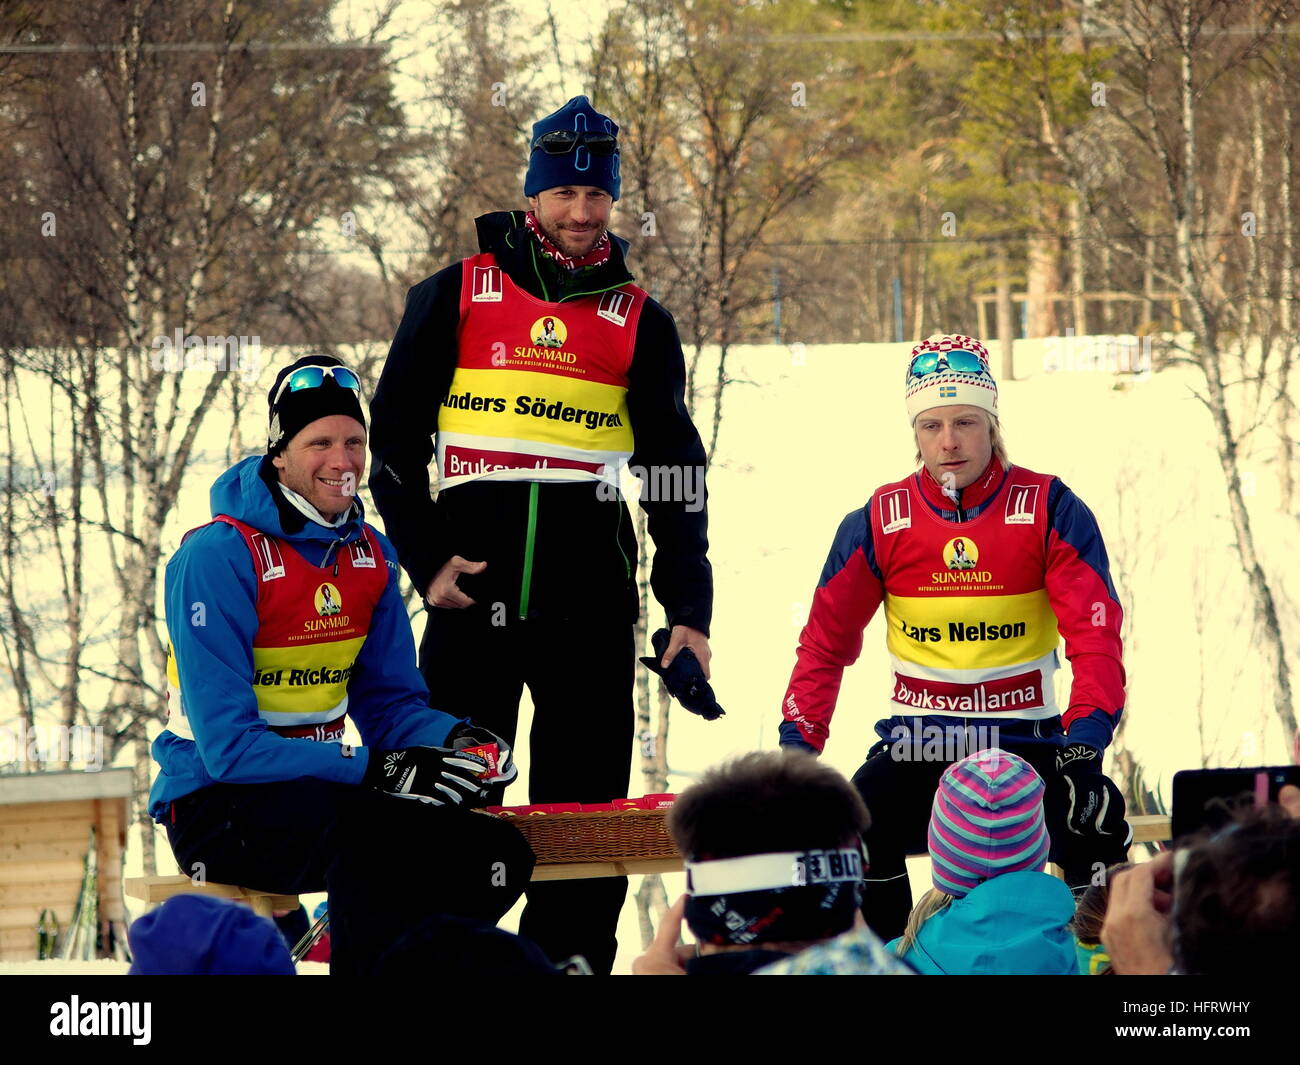 Award ceremony at a ski competin fo children at Bruksvallarna April 2015, Sweden with Anders Södergren, Richardsson, Lars Nelson Stock Photo